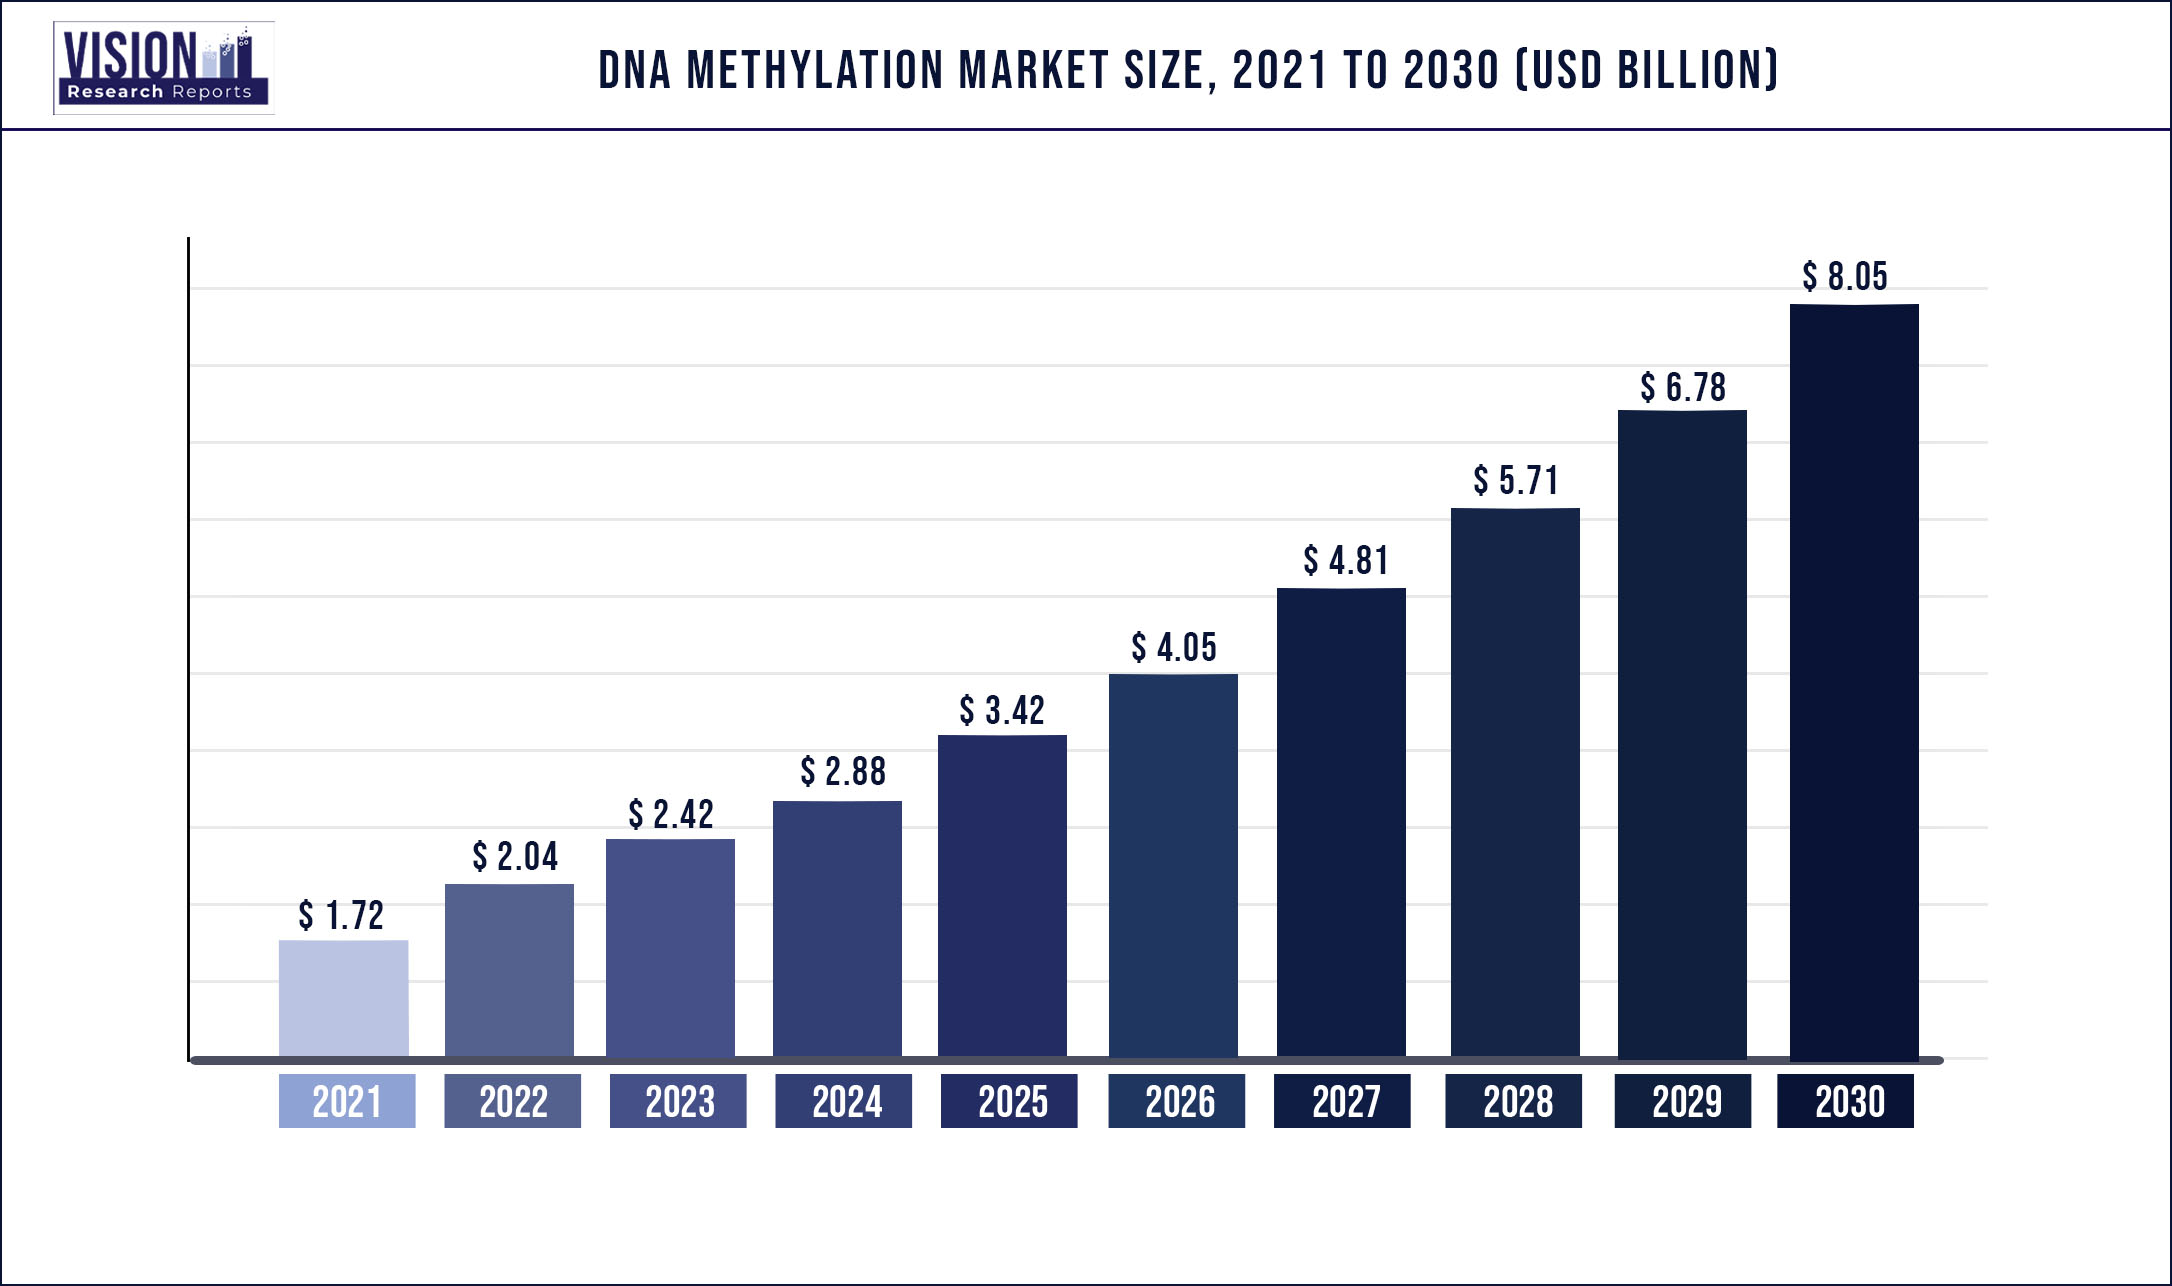 DNA Methylation Market Size 2021 to 2030